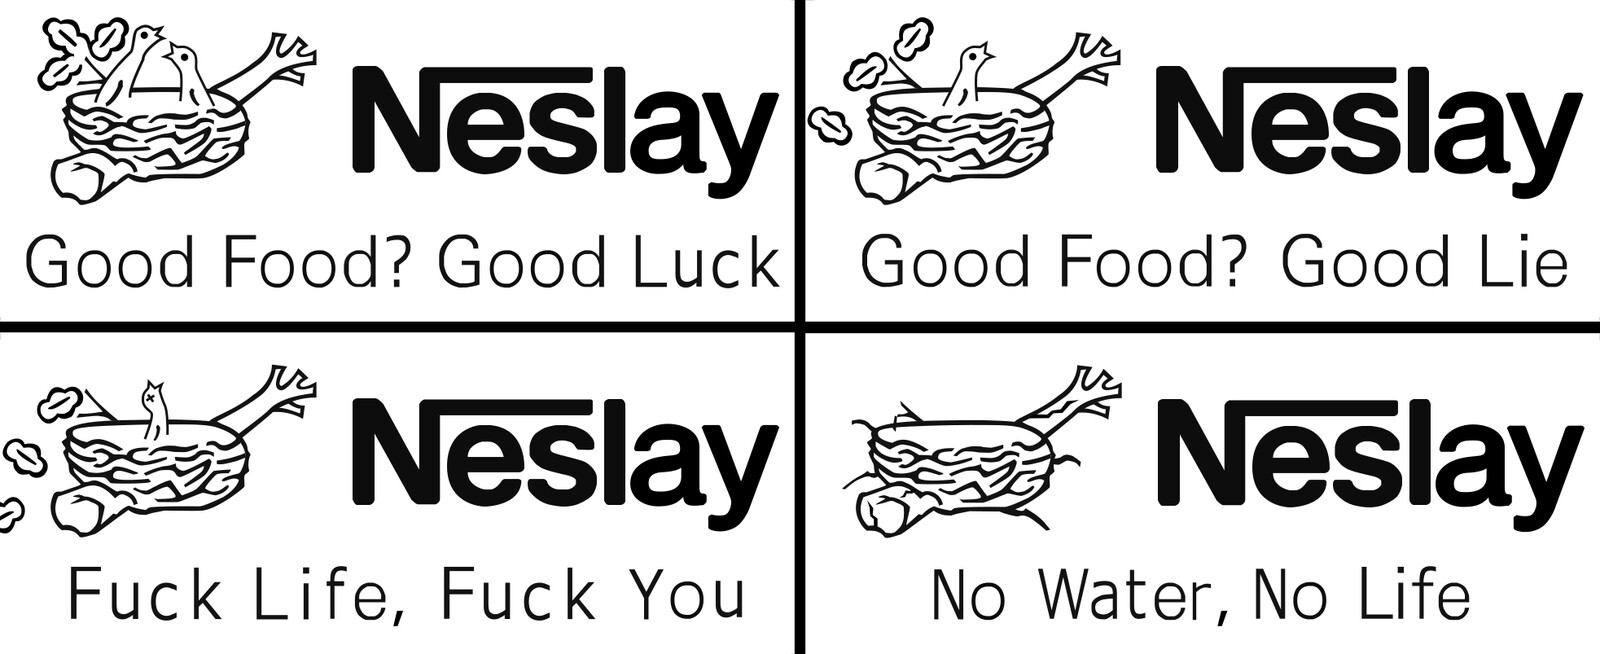 "Neslay" Sticker (progressional variations)